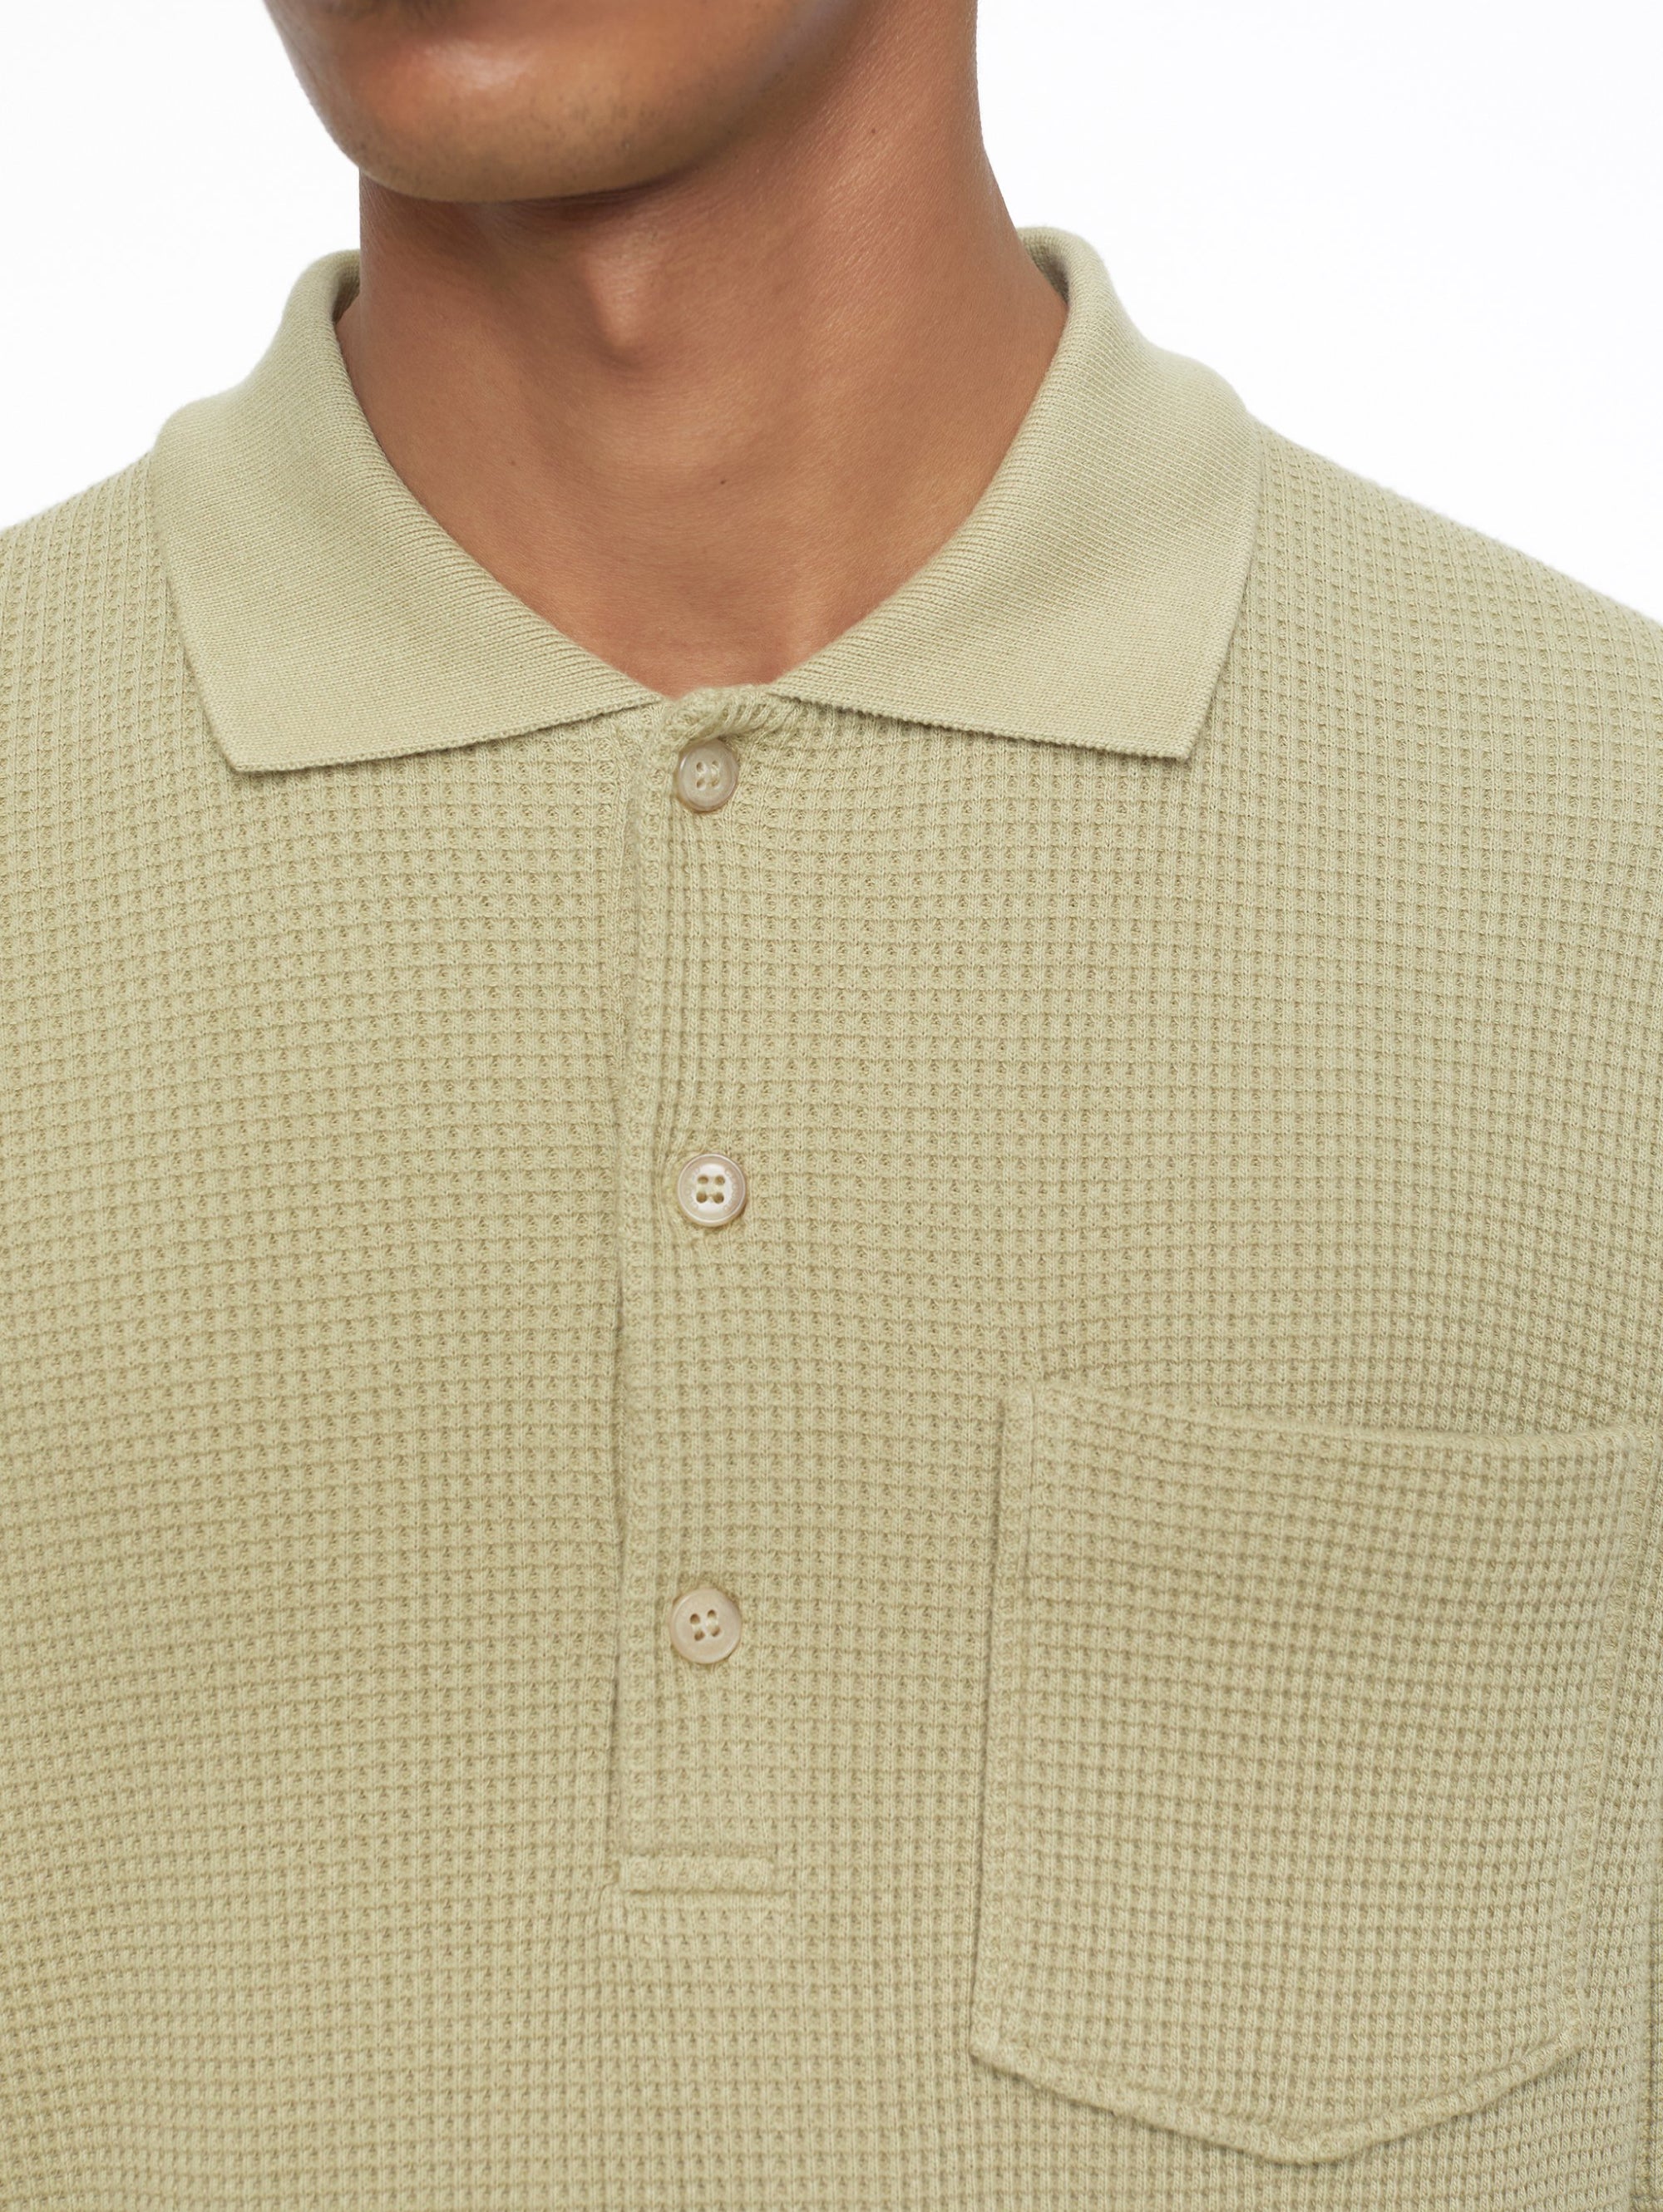 Polo shirt in Sage Waffle Fabric